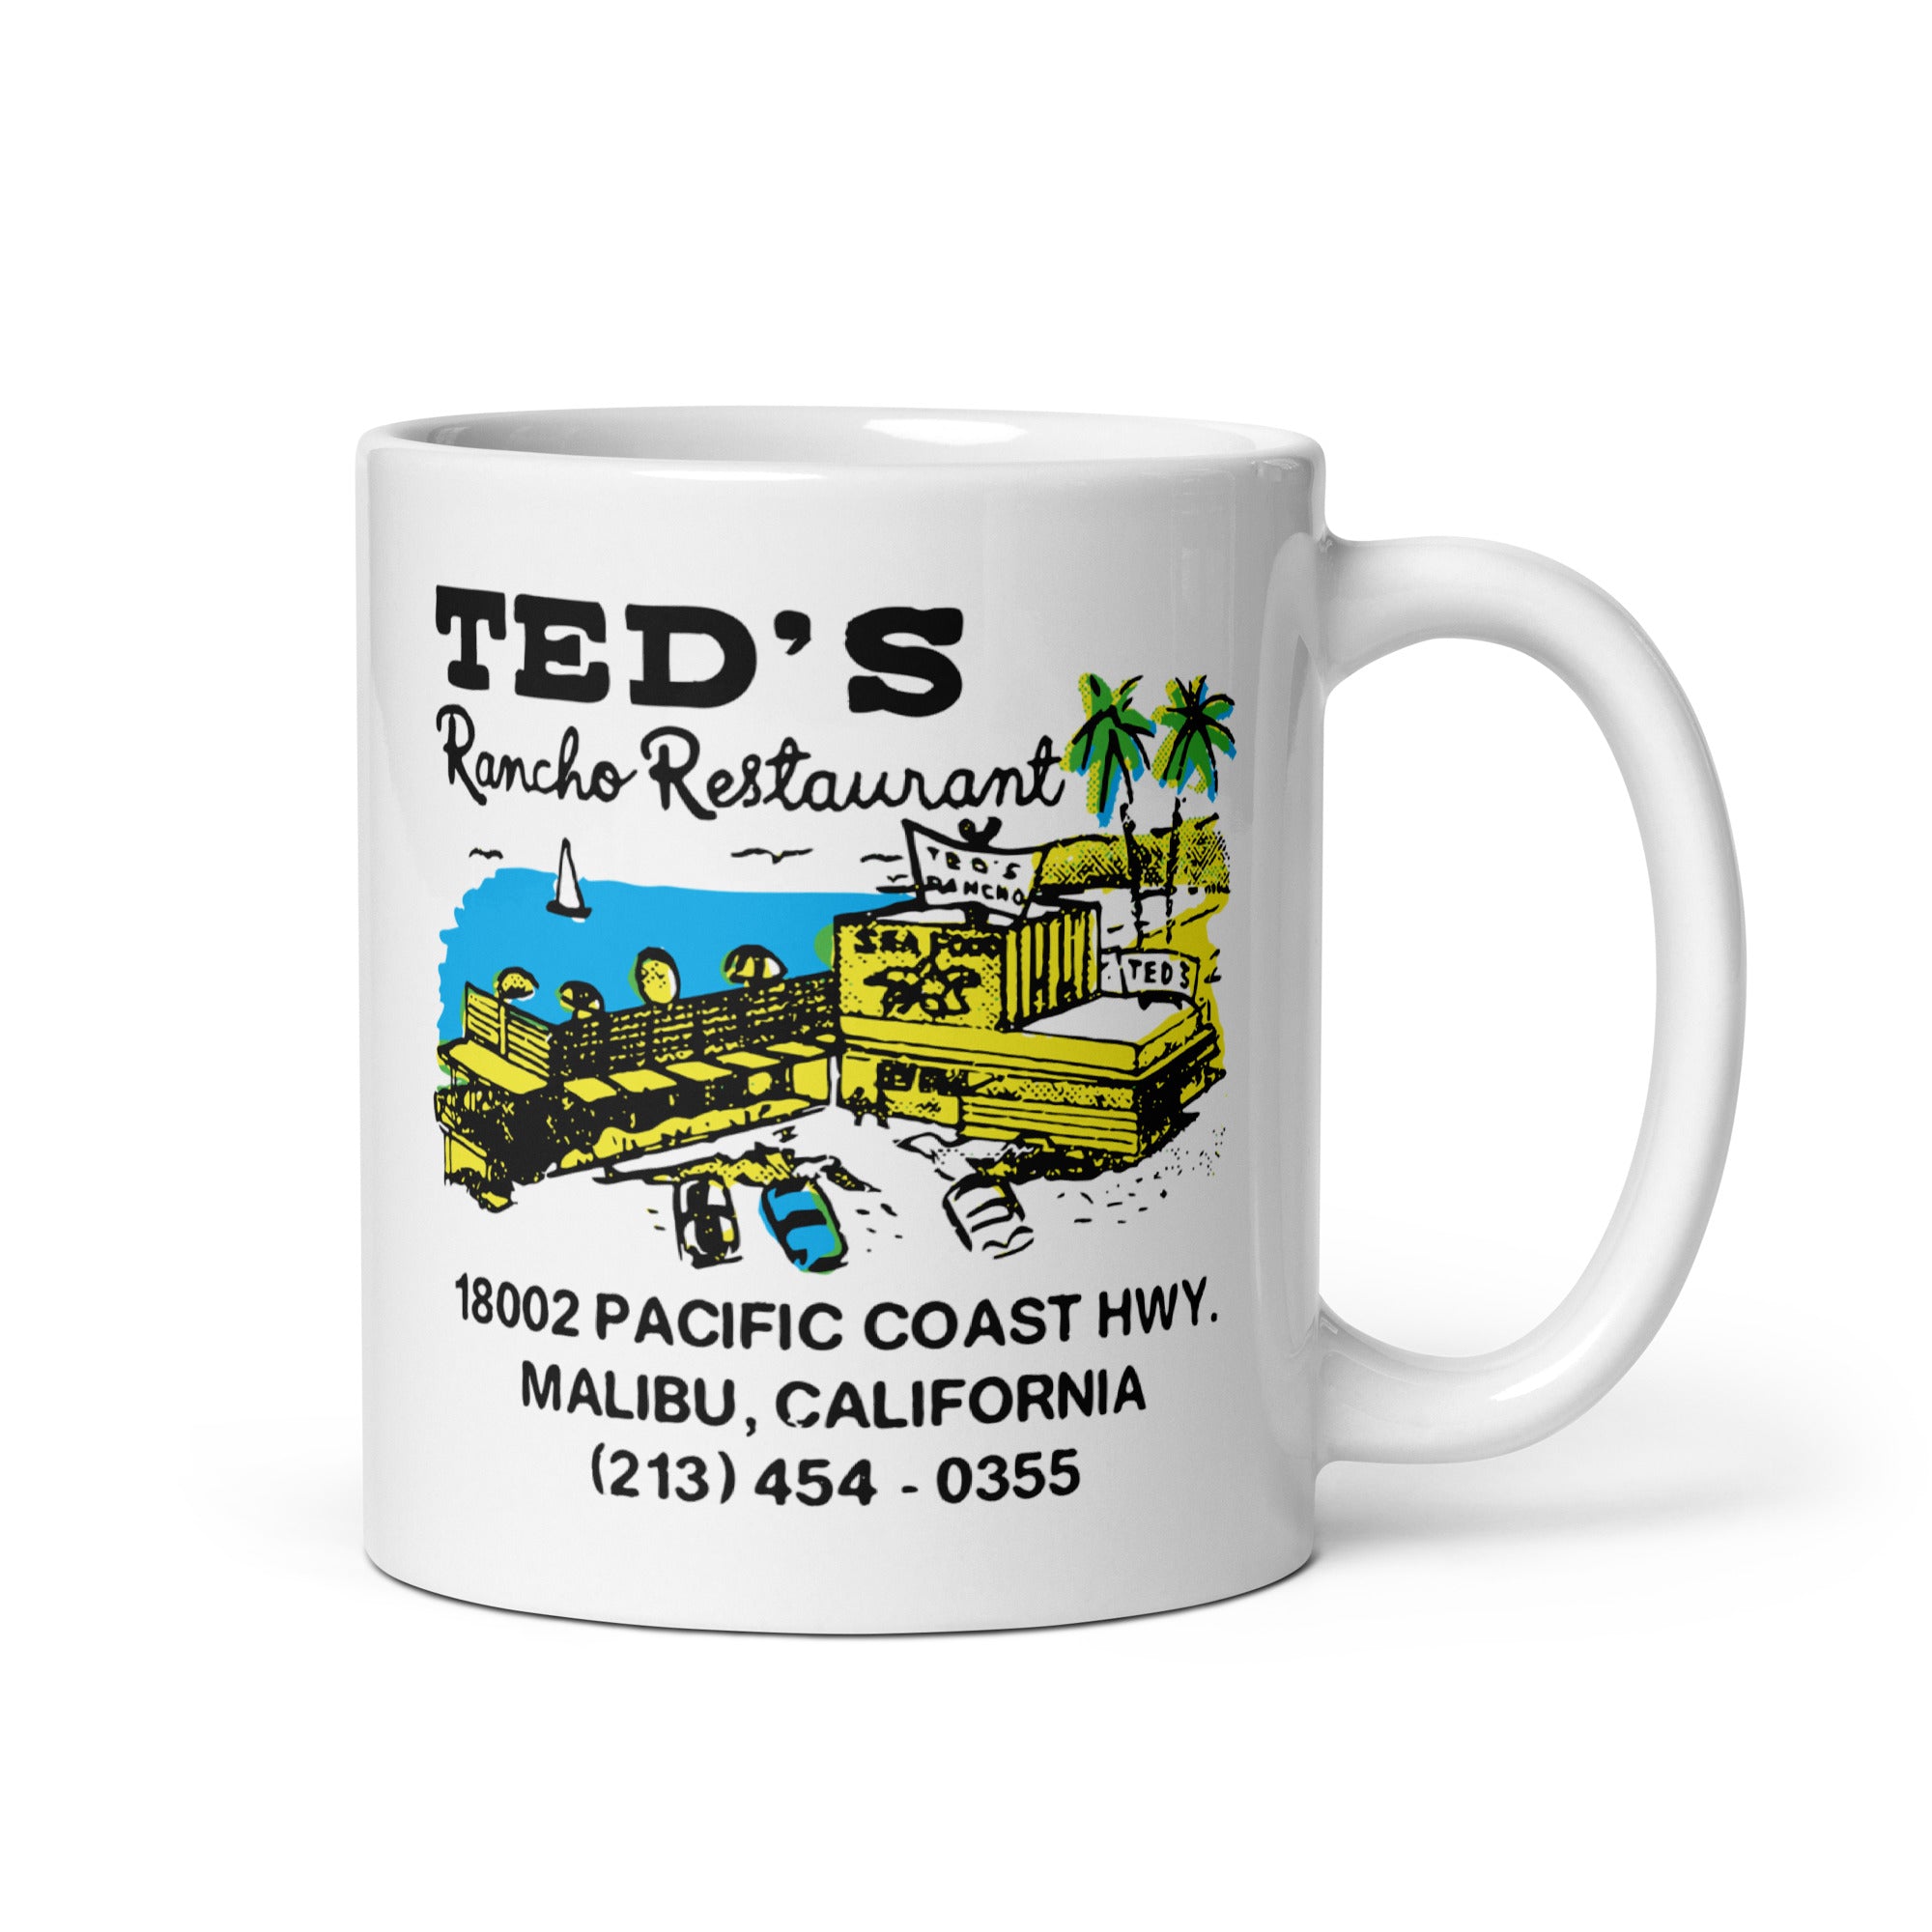 Ted's Rancho Restaurant - Malibu, CA - 11oz Coffee Mug